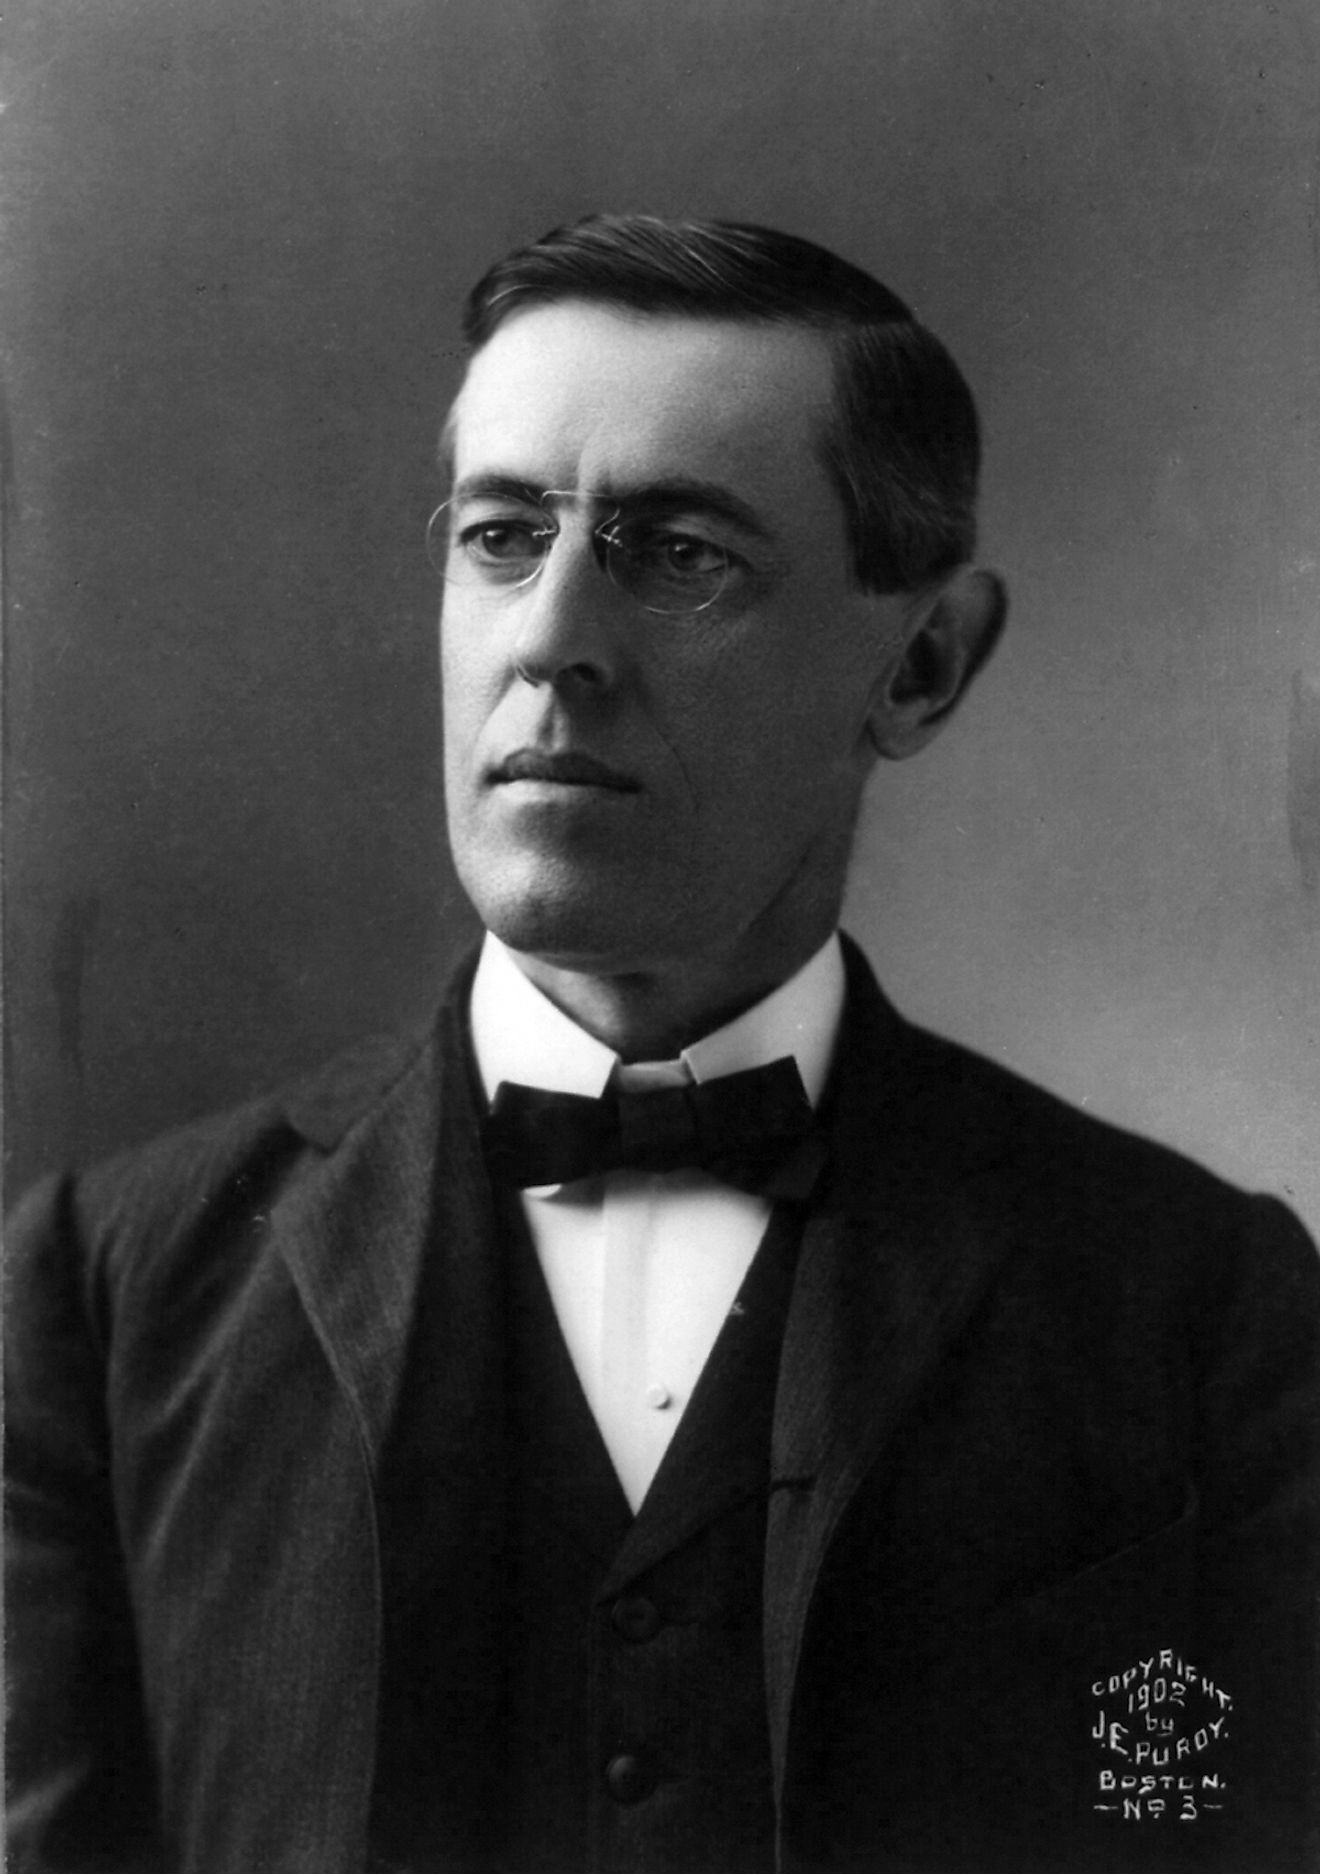 Woodrow Wilson, as President of Princeton University. Image credit: James E. Purdy/Public domain